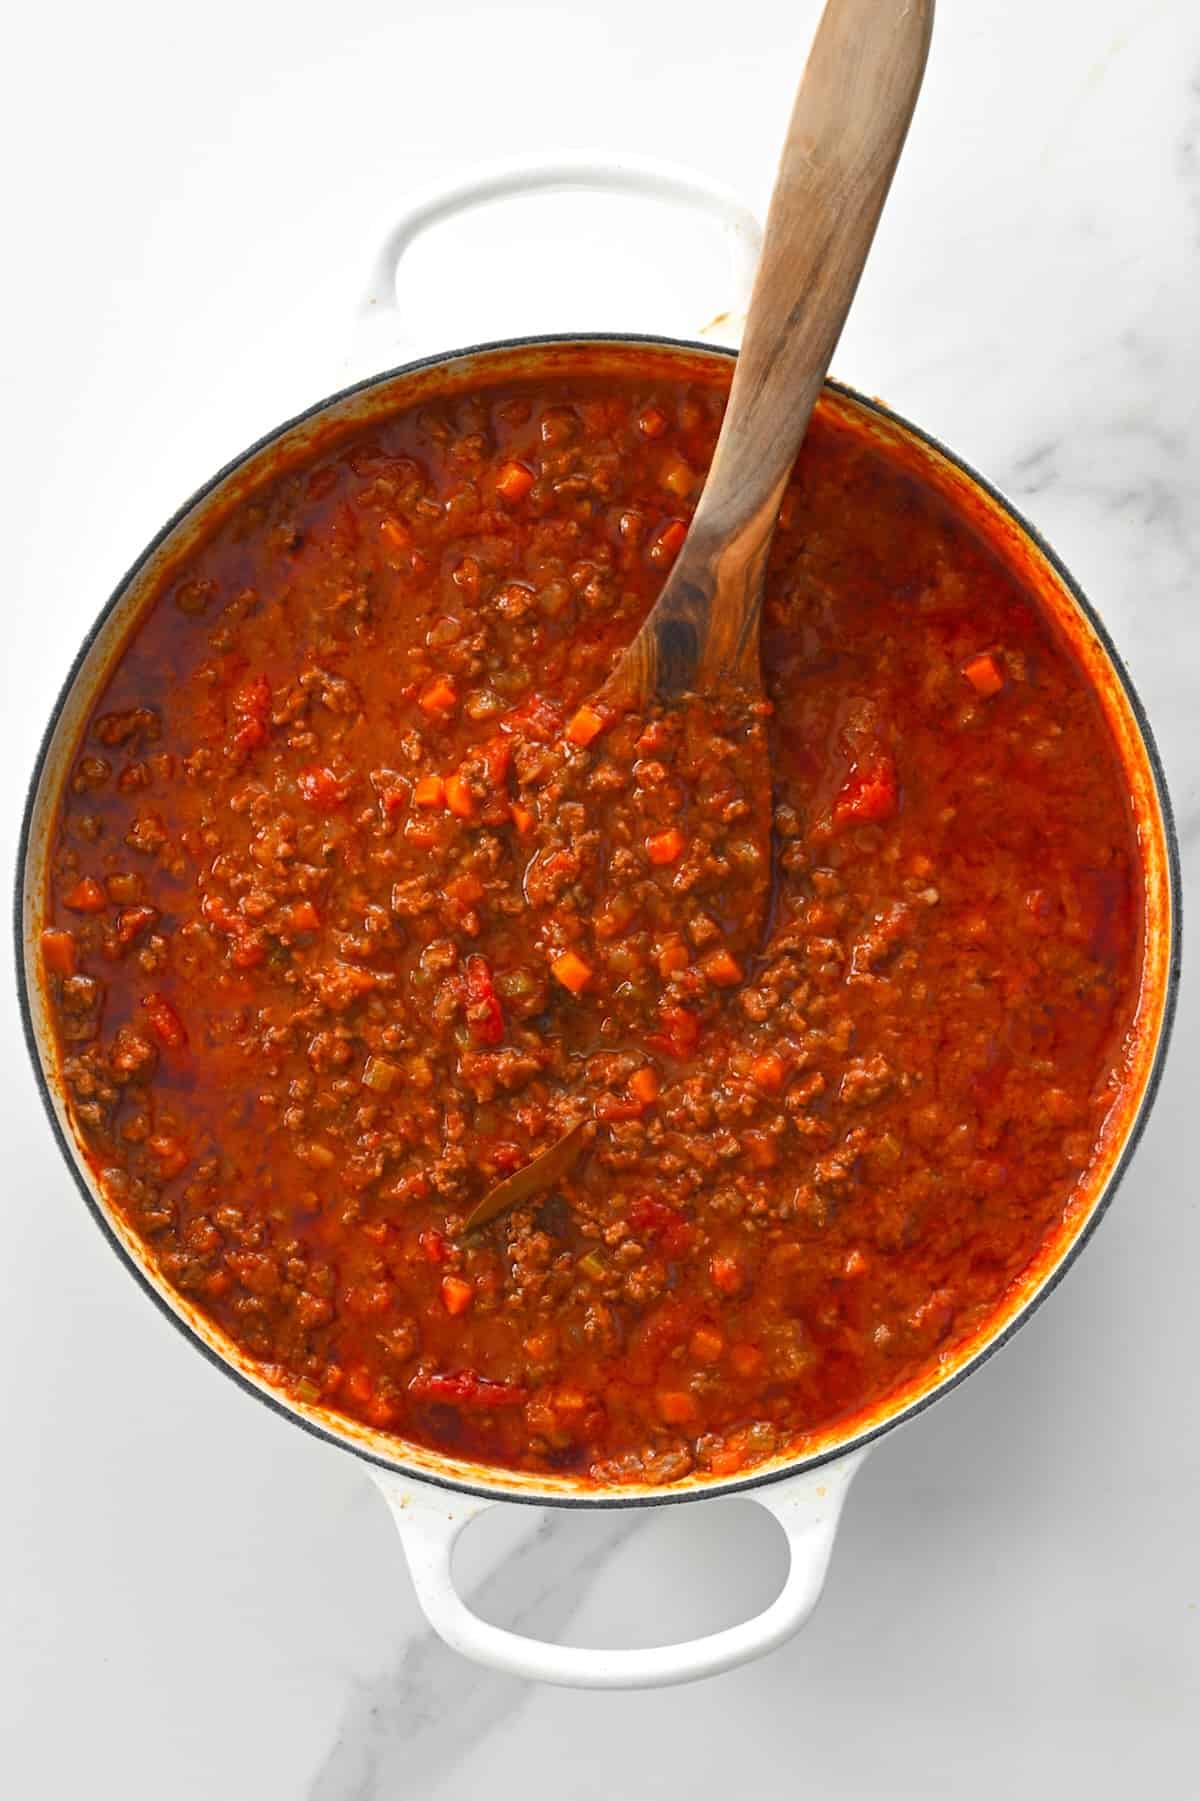 Homemade spaghetti sauce in a pot